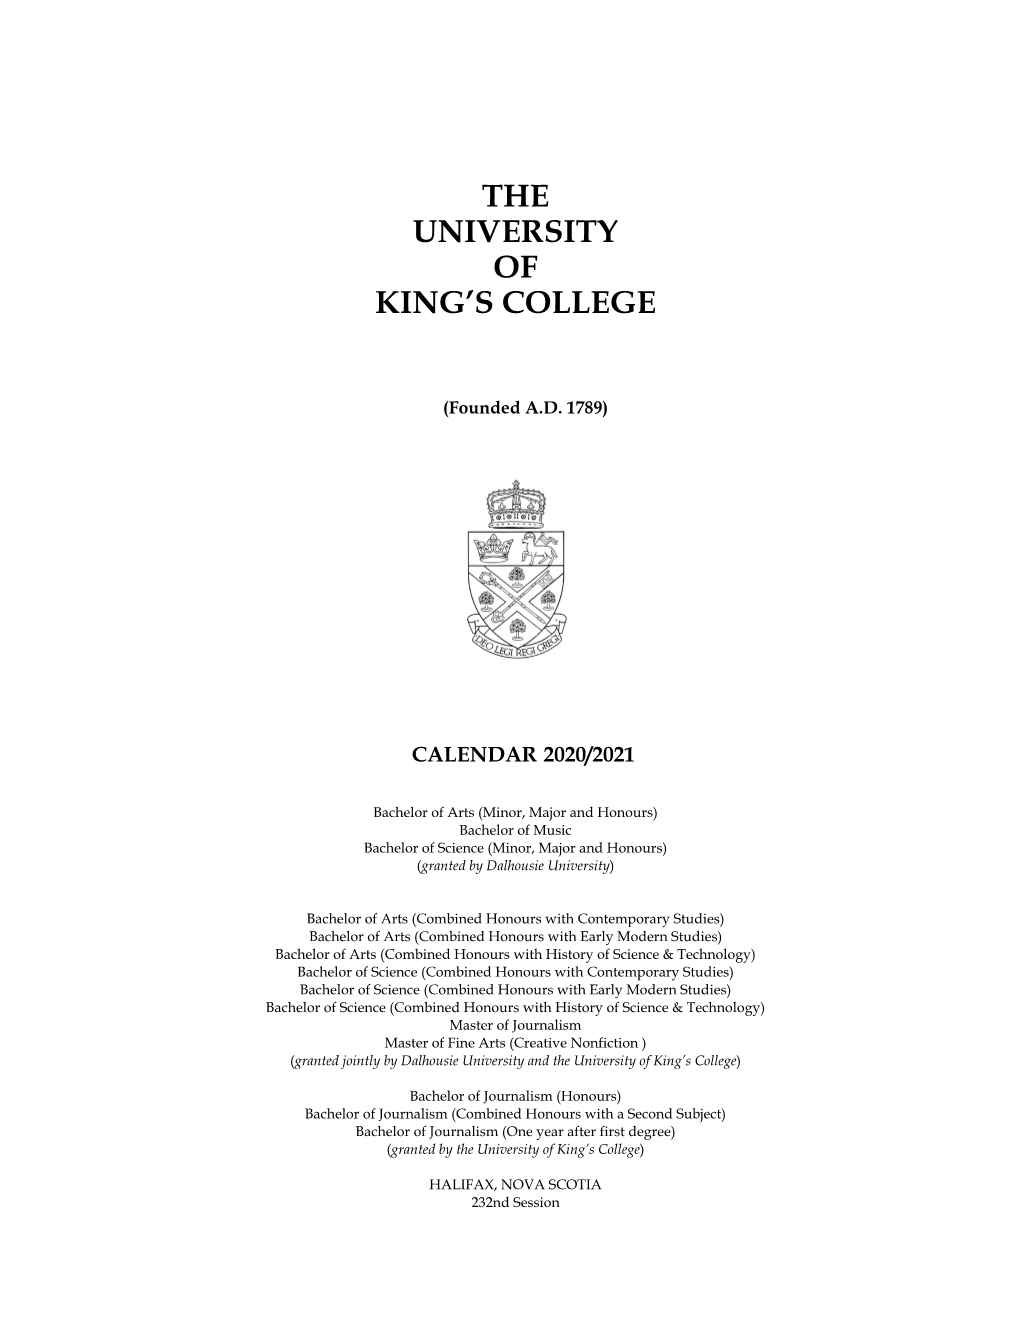 Unviersity of King's College Academic Calendar 2020/21